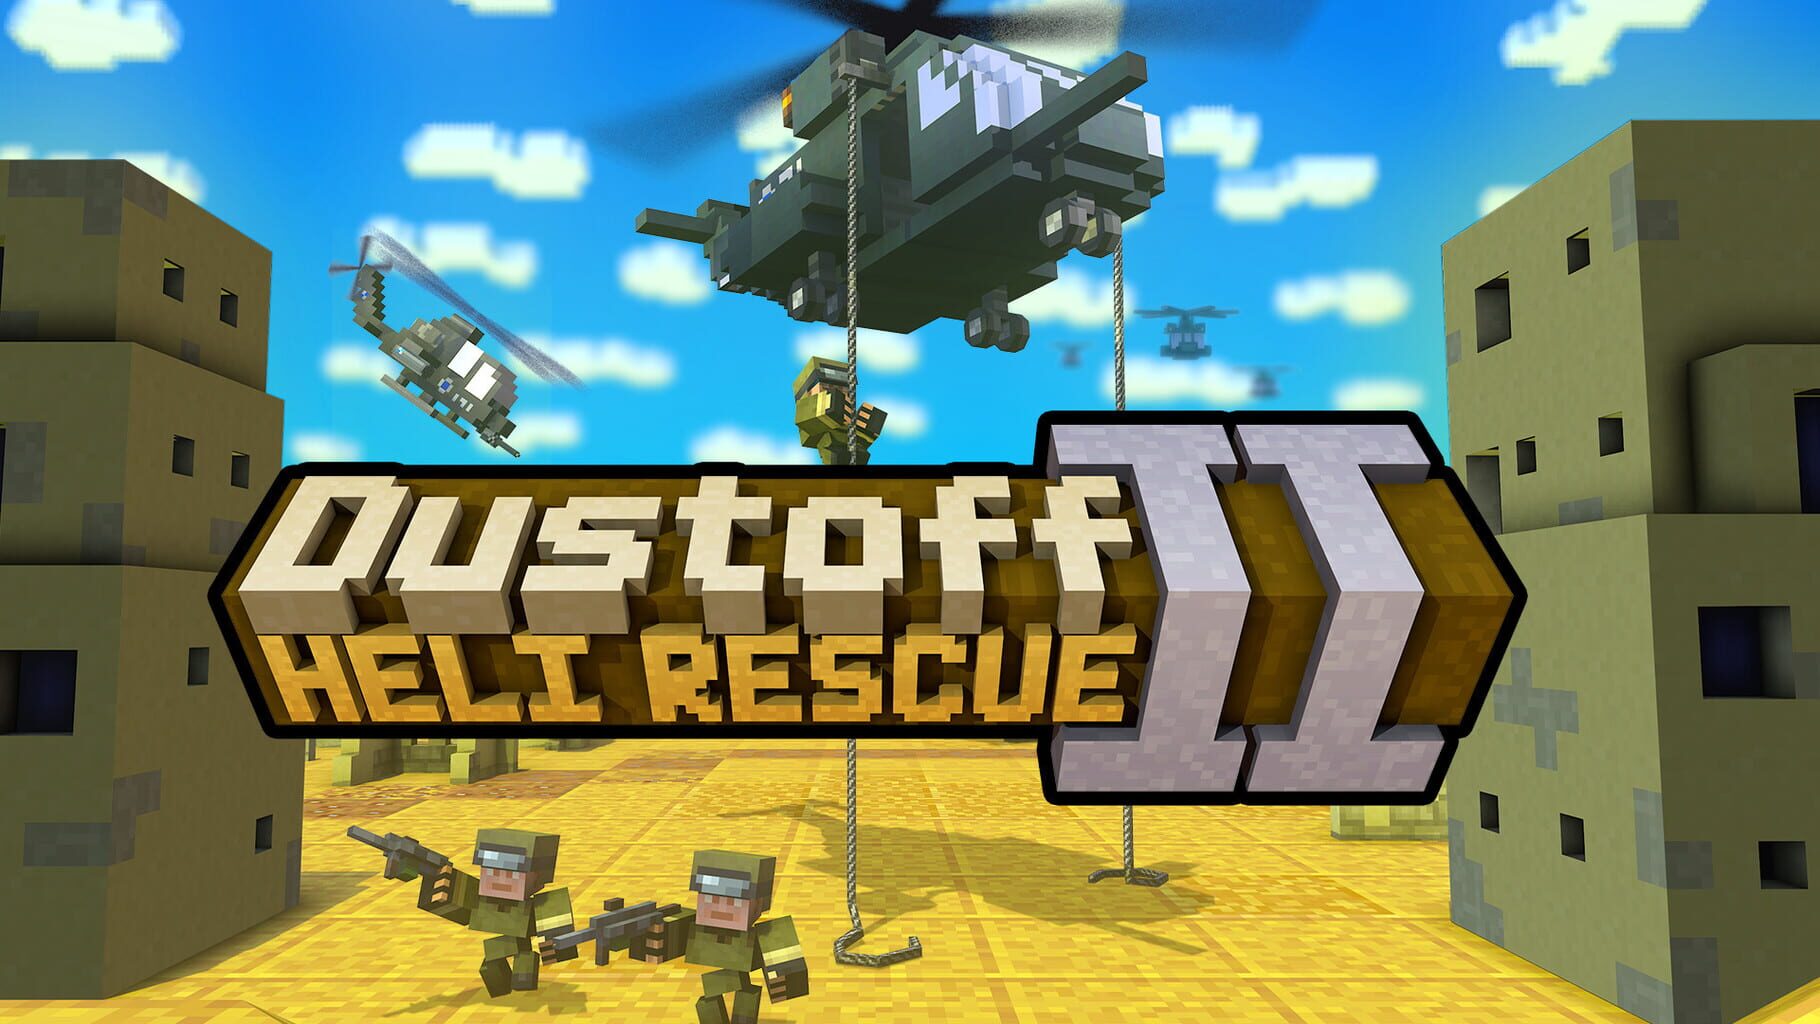 Dustoff Heli Rescue 2 artwork